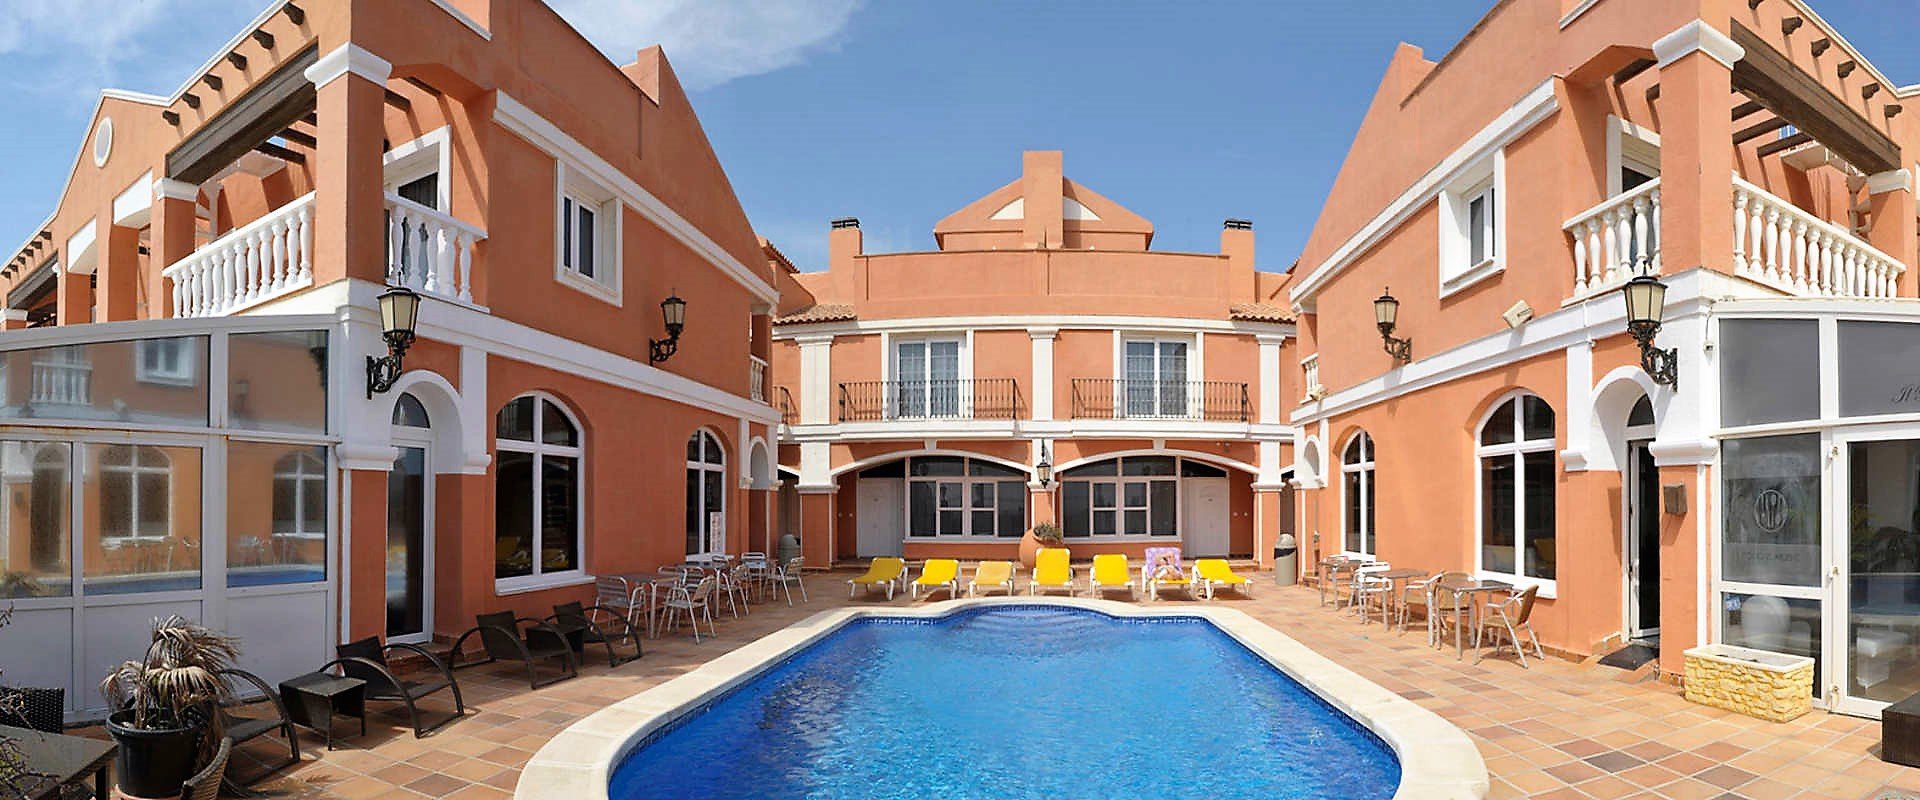 Explora un aparthotel lleno de sorpresas Aparthotel Lloyds Beach Club Torrevieja, Alicante